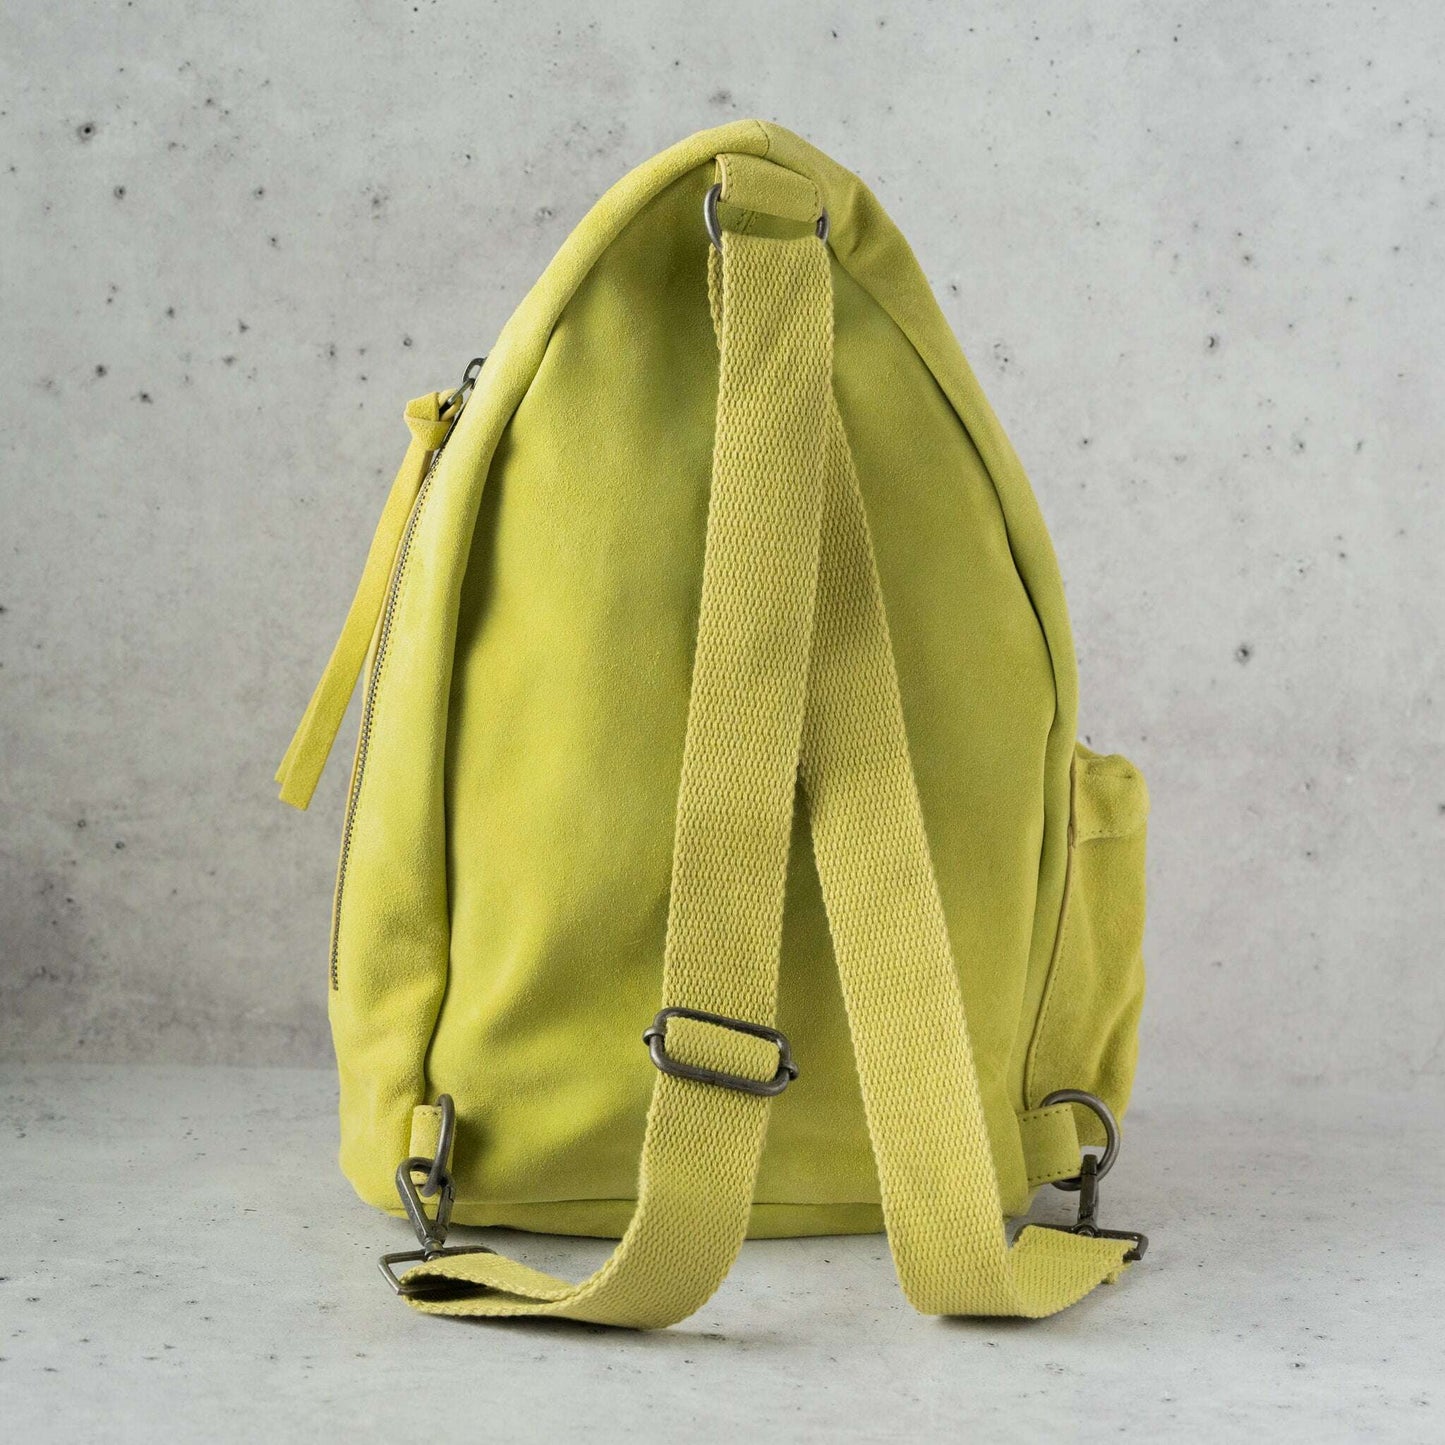 Free People - Oxford Sling Bag in Chartreuse, Handbags, Free People, Plum Bottom